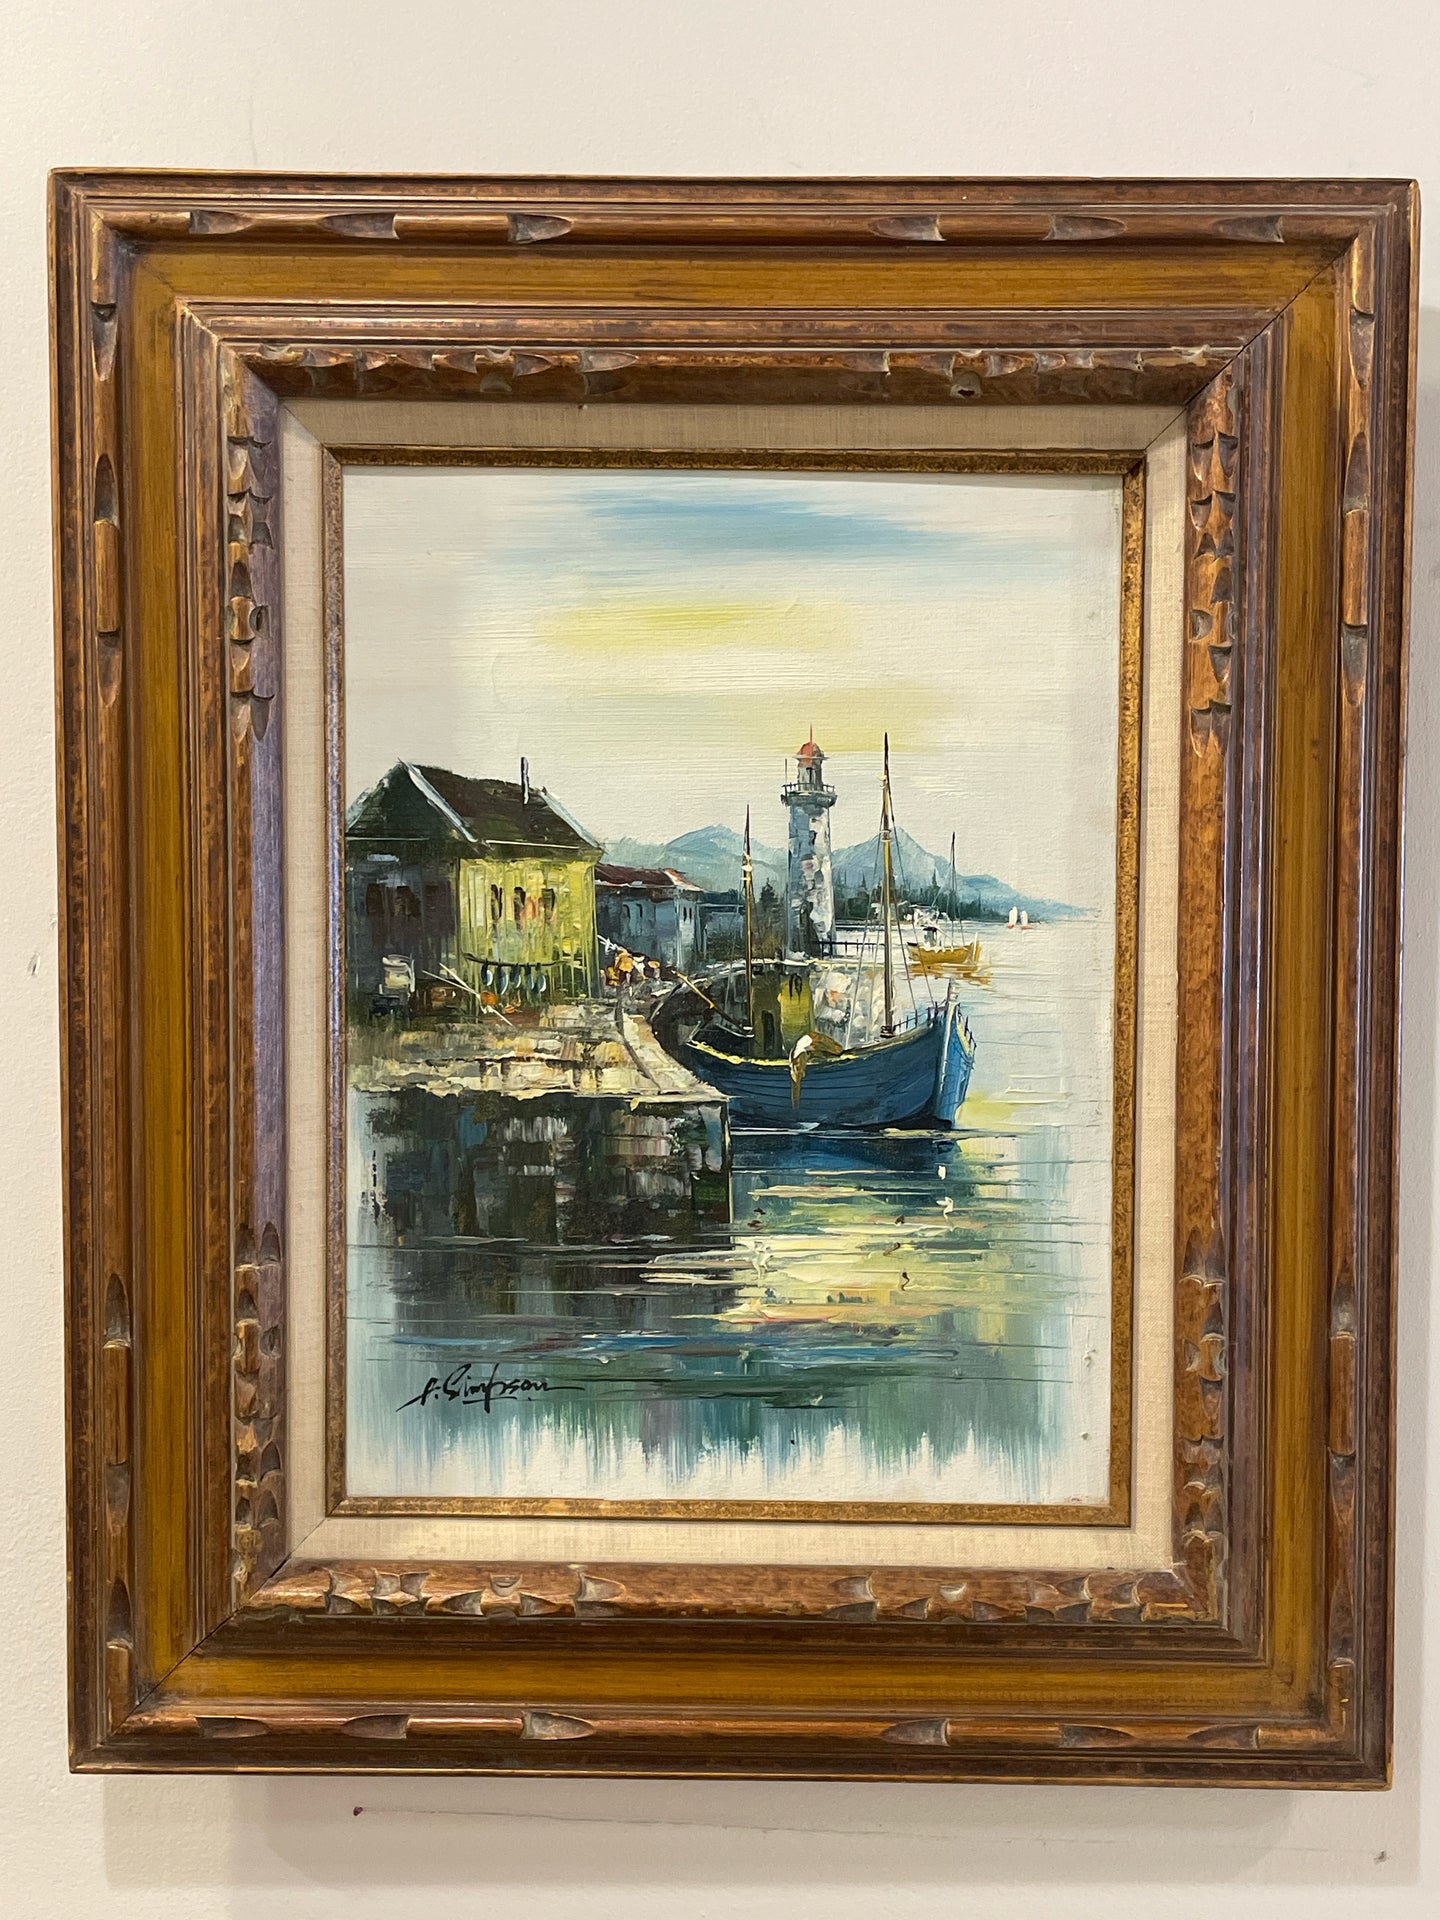 Framed Oil Painting of Harbor & Lighthouse, signed